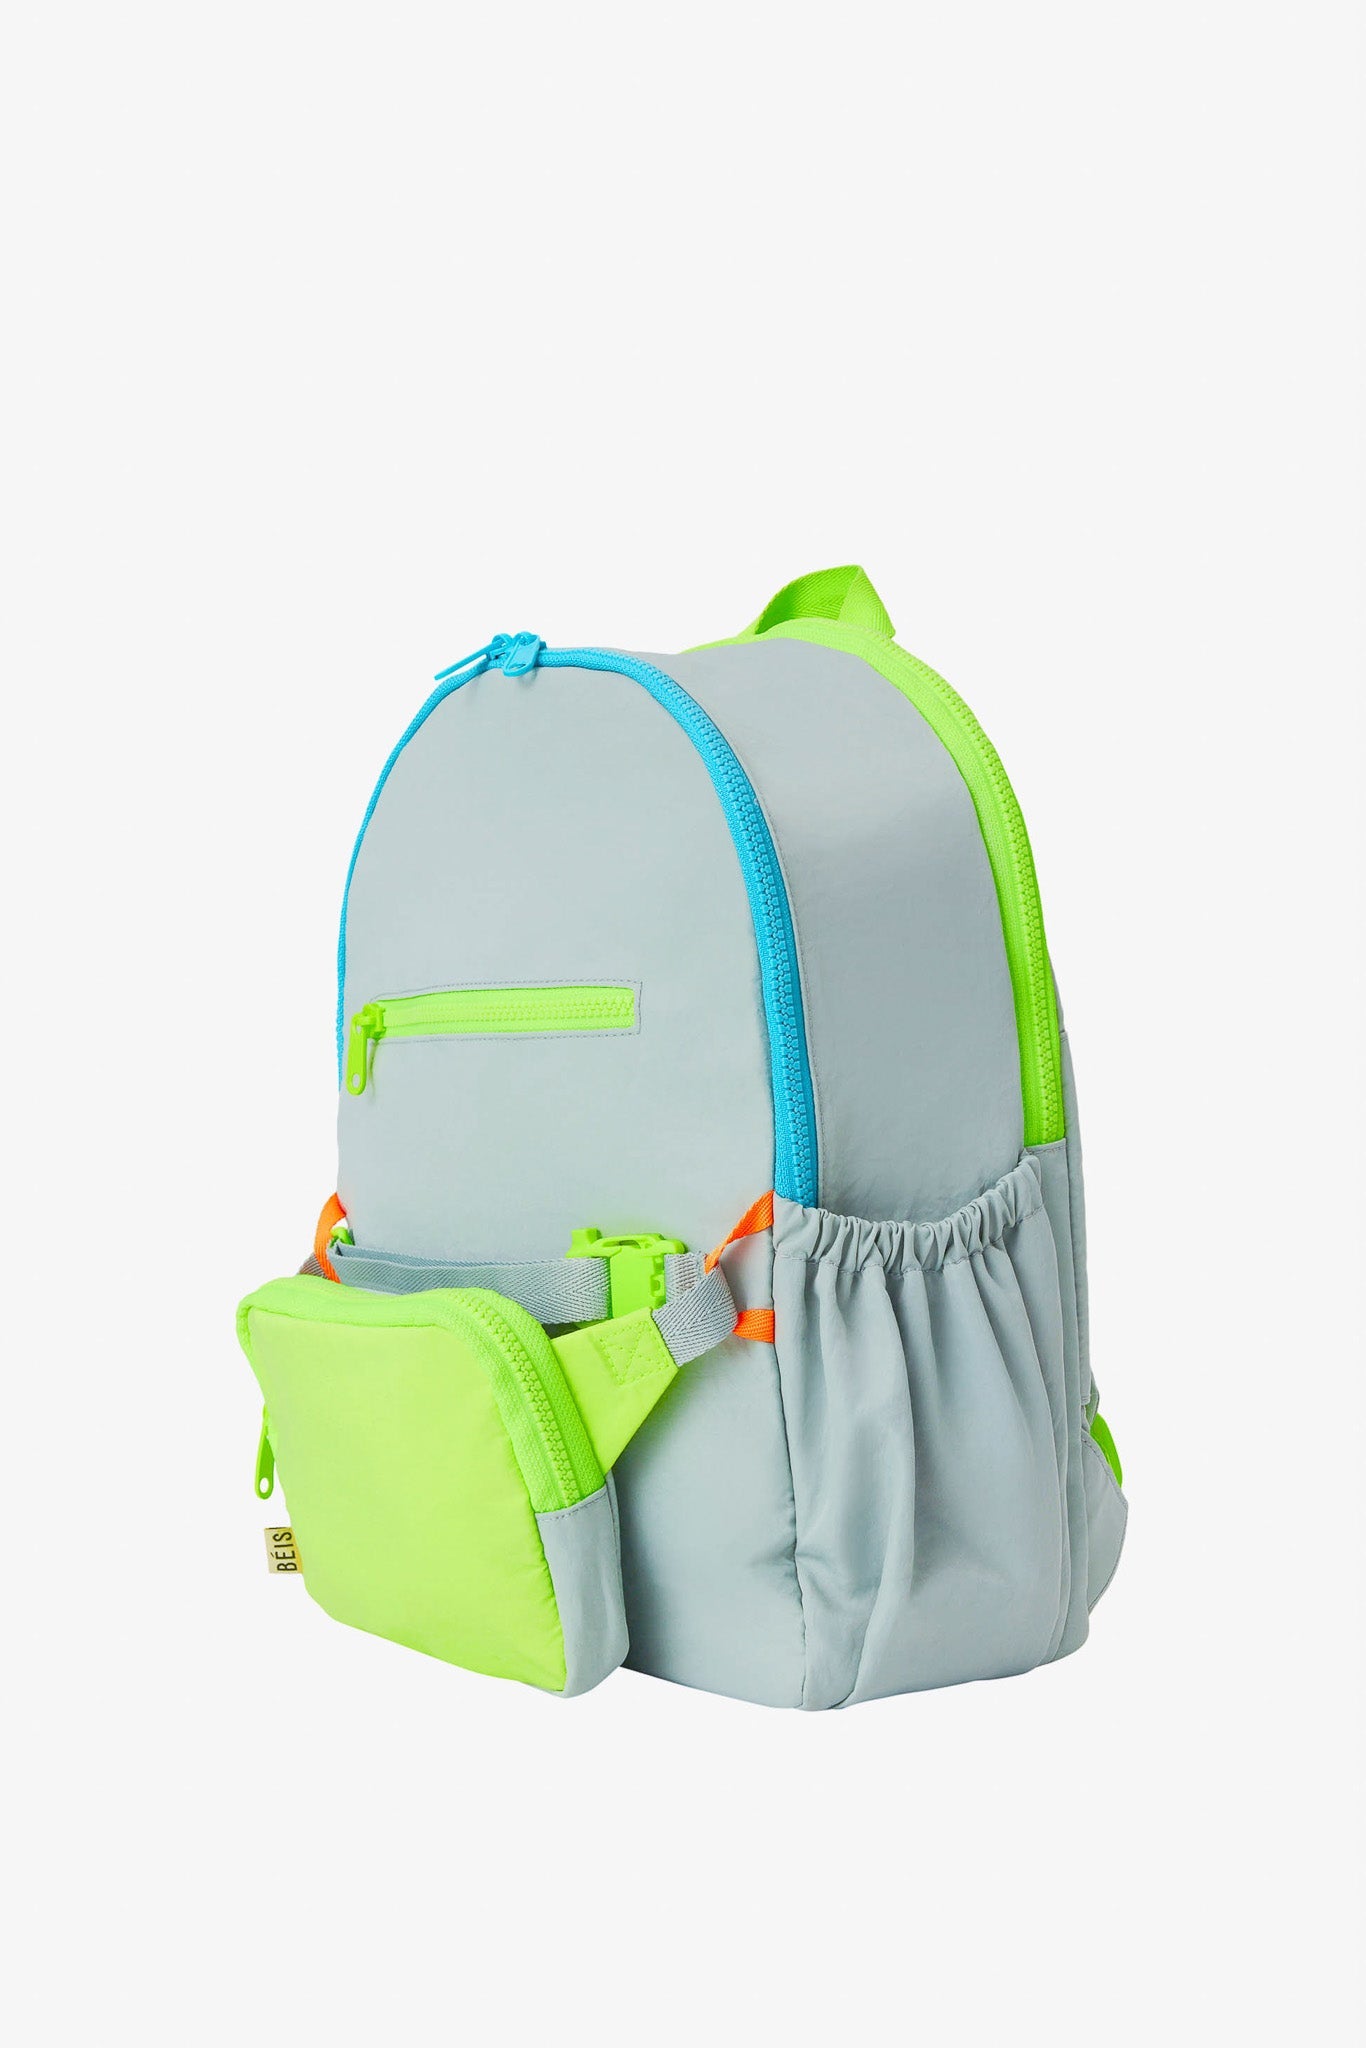 BÉIS 'The Kids Backpack' in Slate - Best Travel Backpack For Kids in Blue